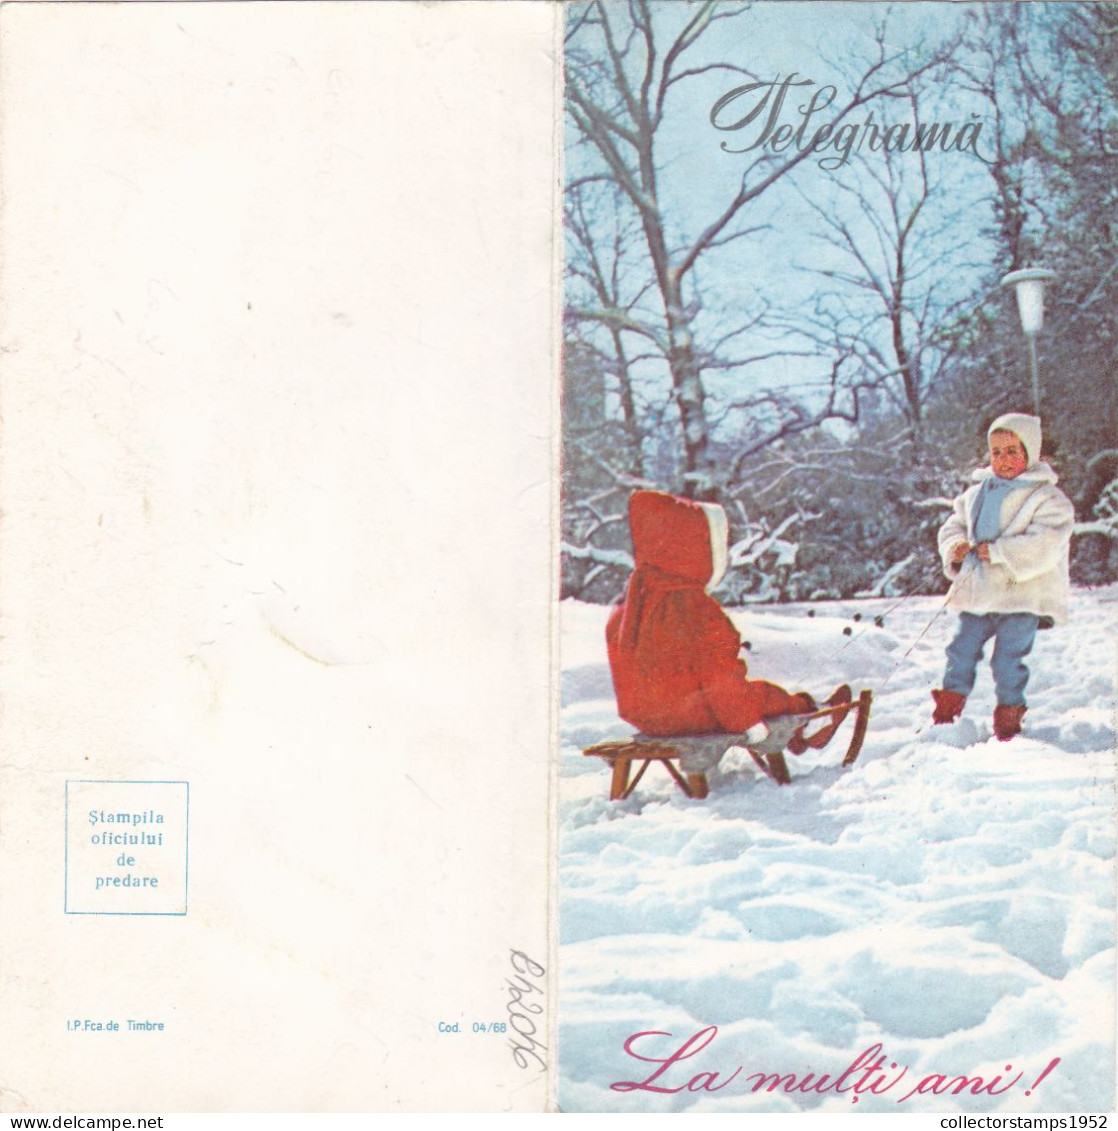 Winter WITH Sledding,TELEGRAM, TELEGRAPH, 1968, ROMANIA,cod.04/68,LTLx2 - Telegraph